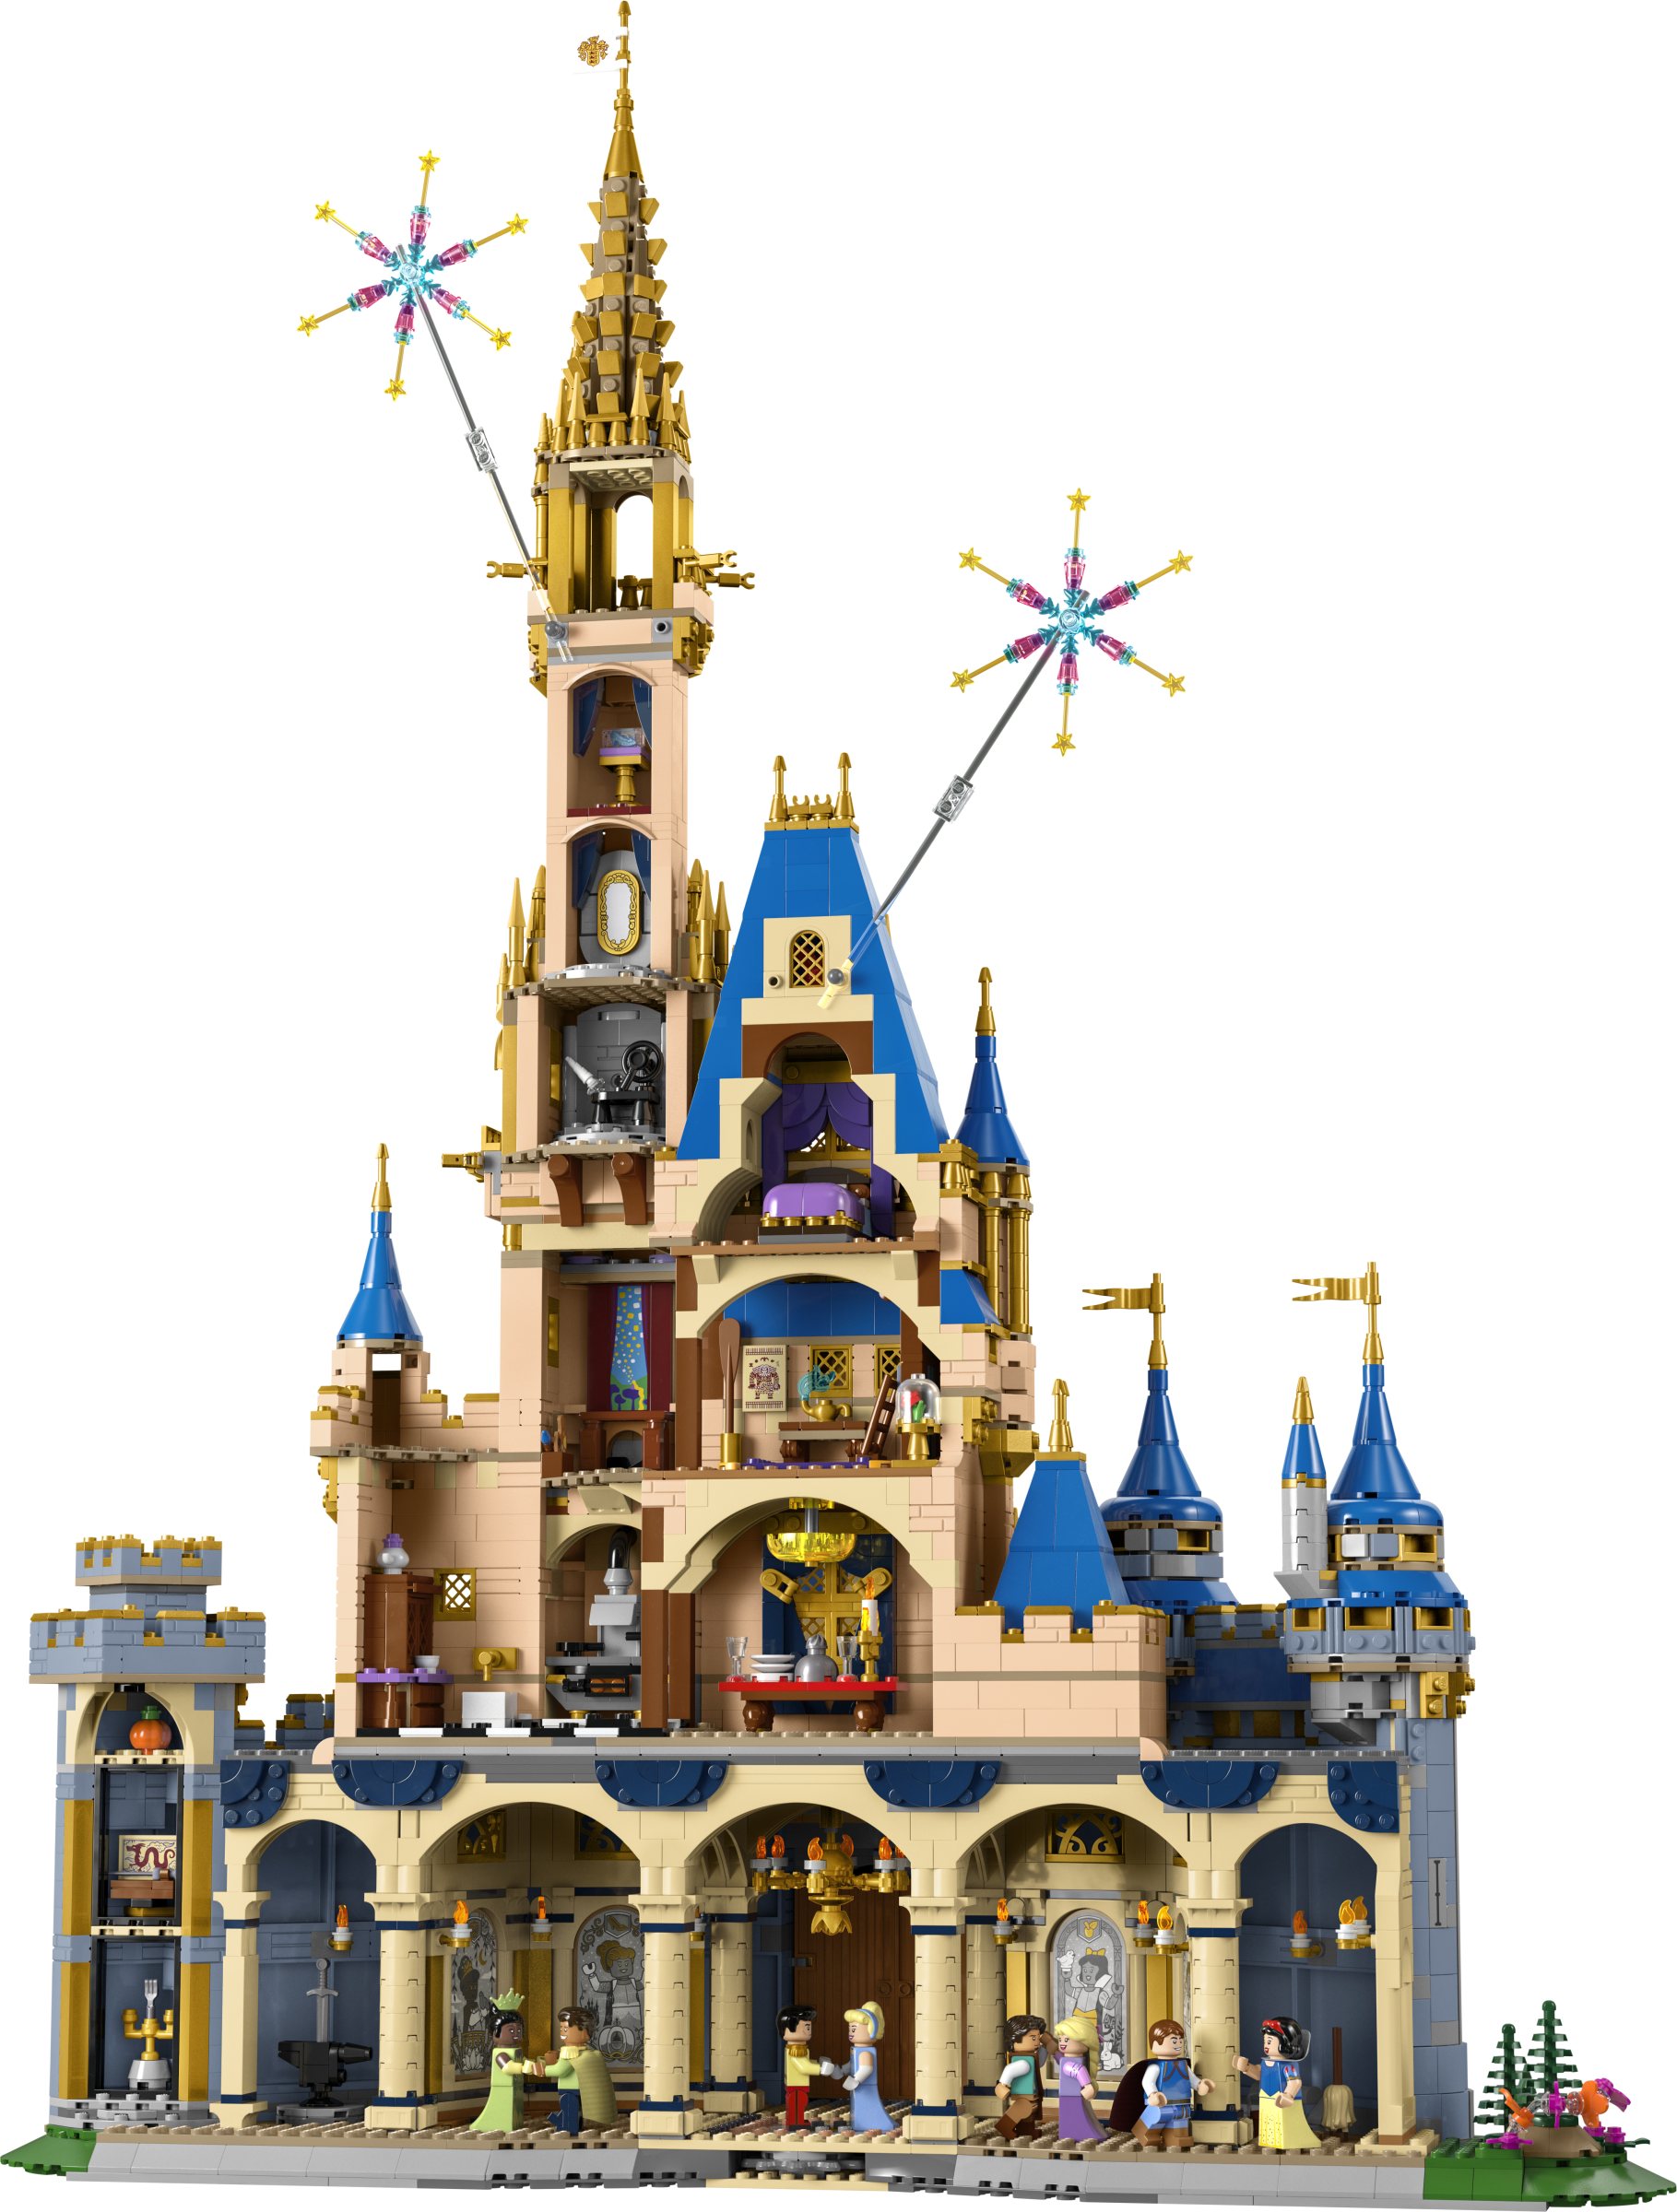 New Disney Castle revealed! Brickset